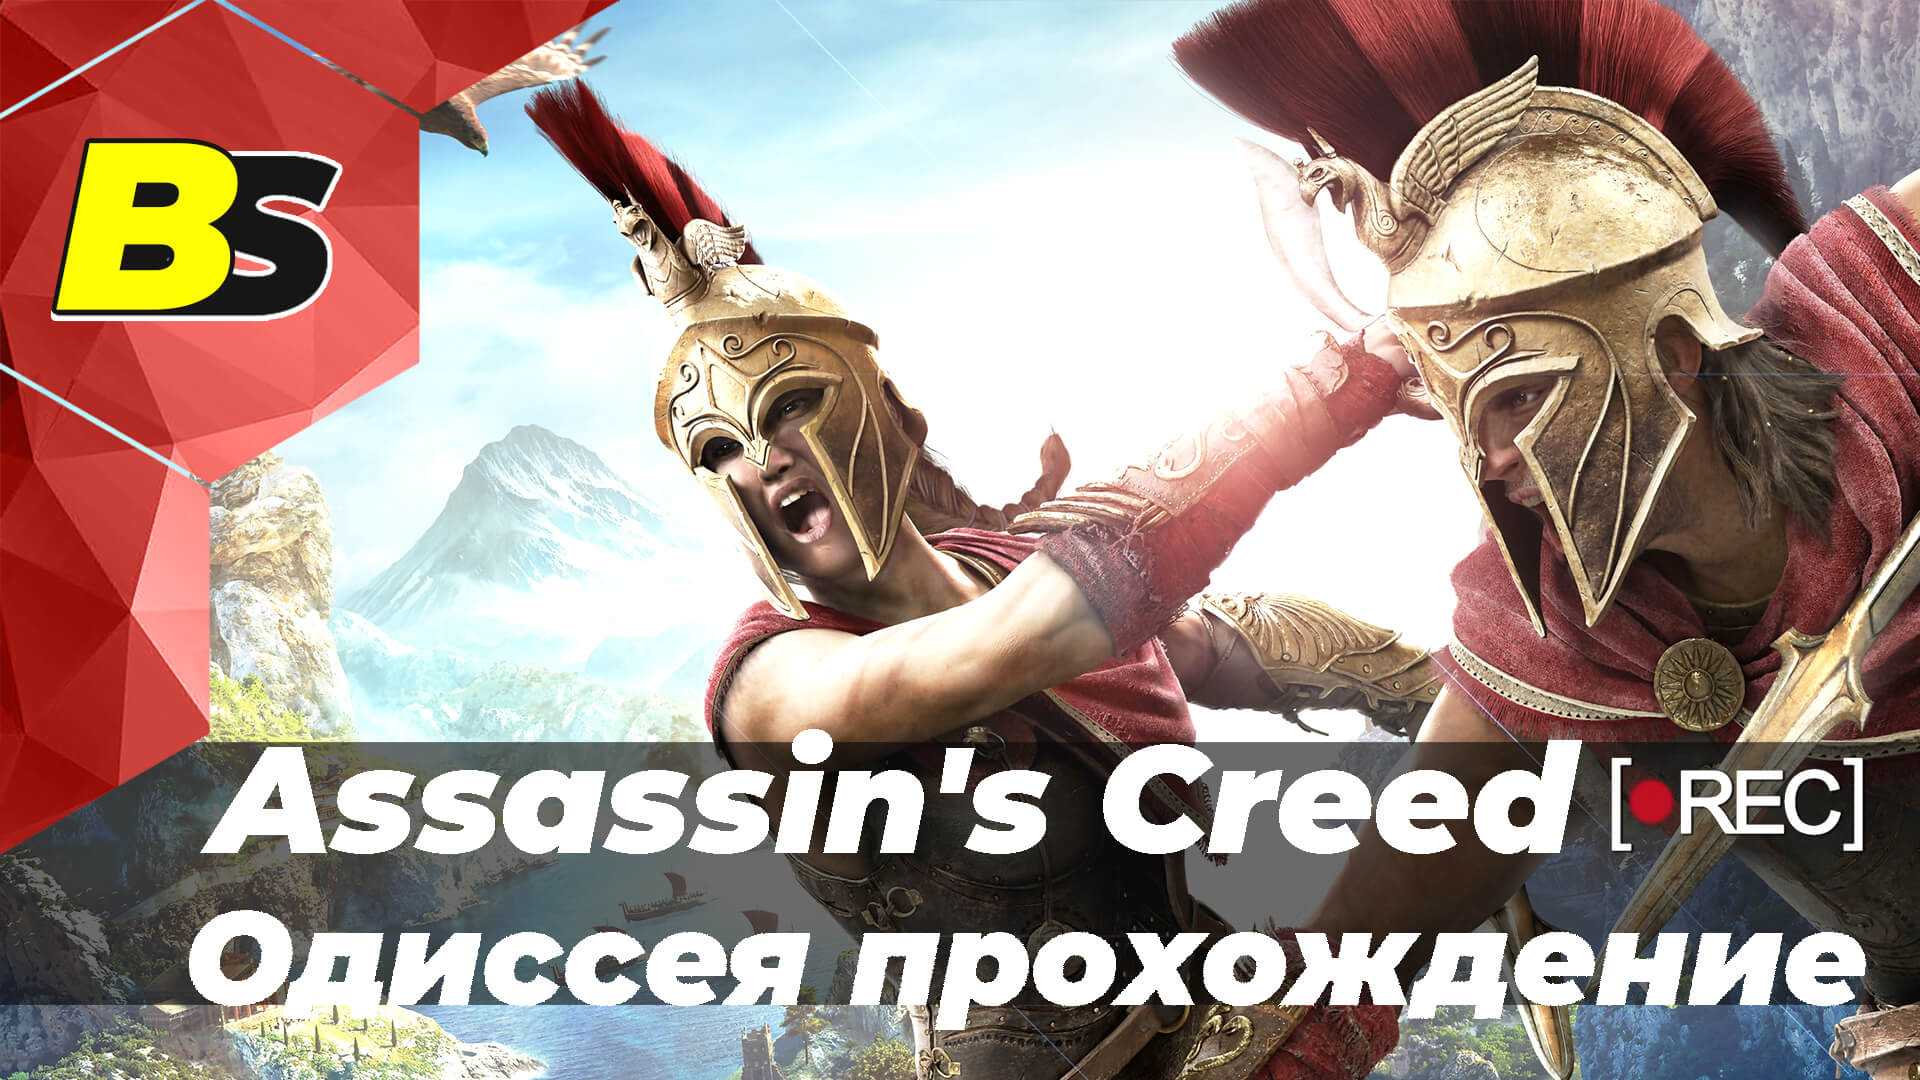 Assassin's creed odyssey: 7 причин, почему алексиос лучше кассандры